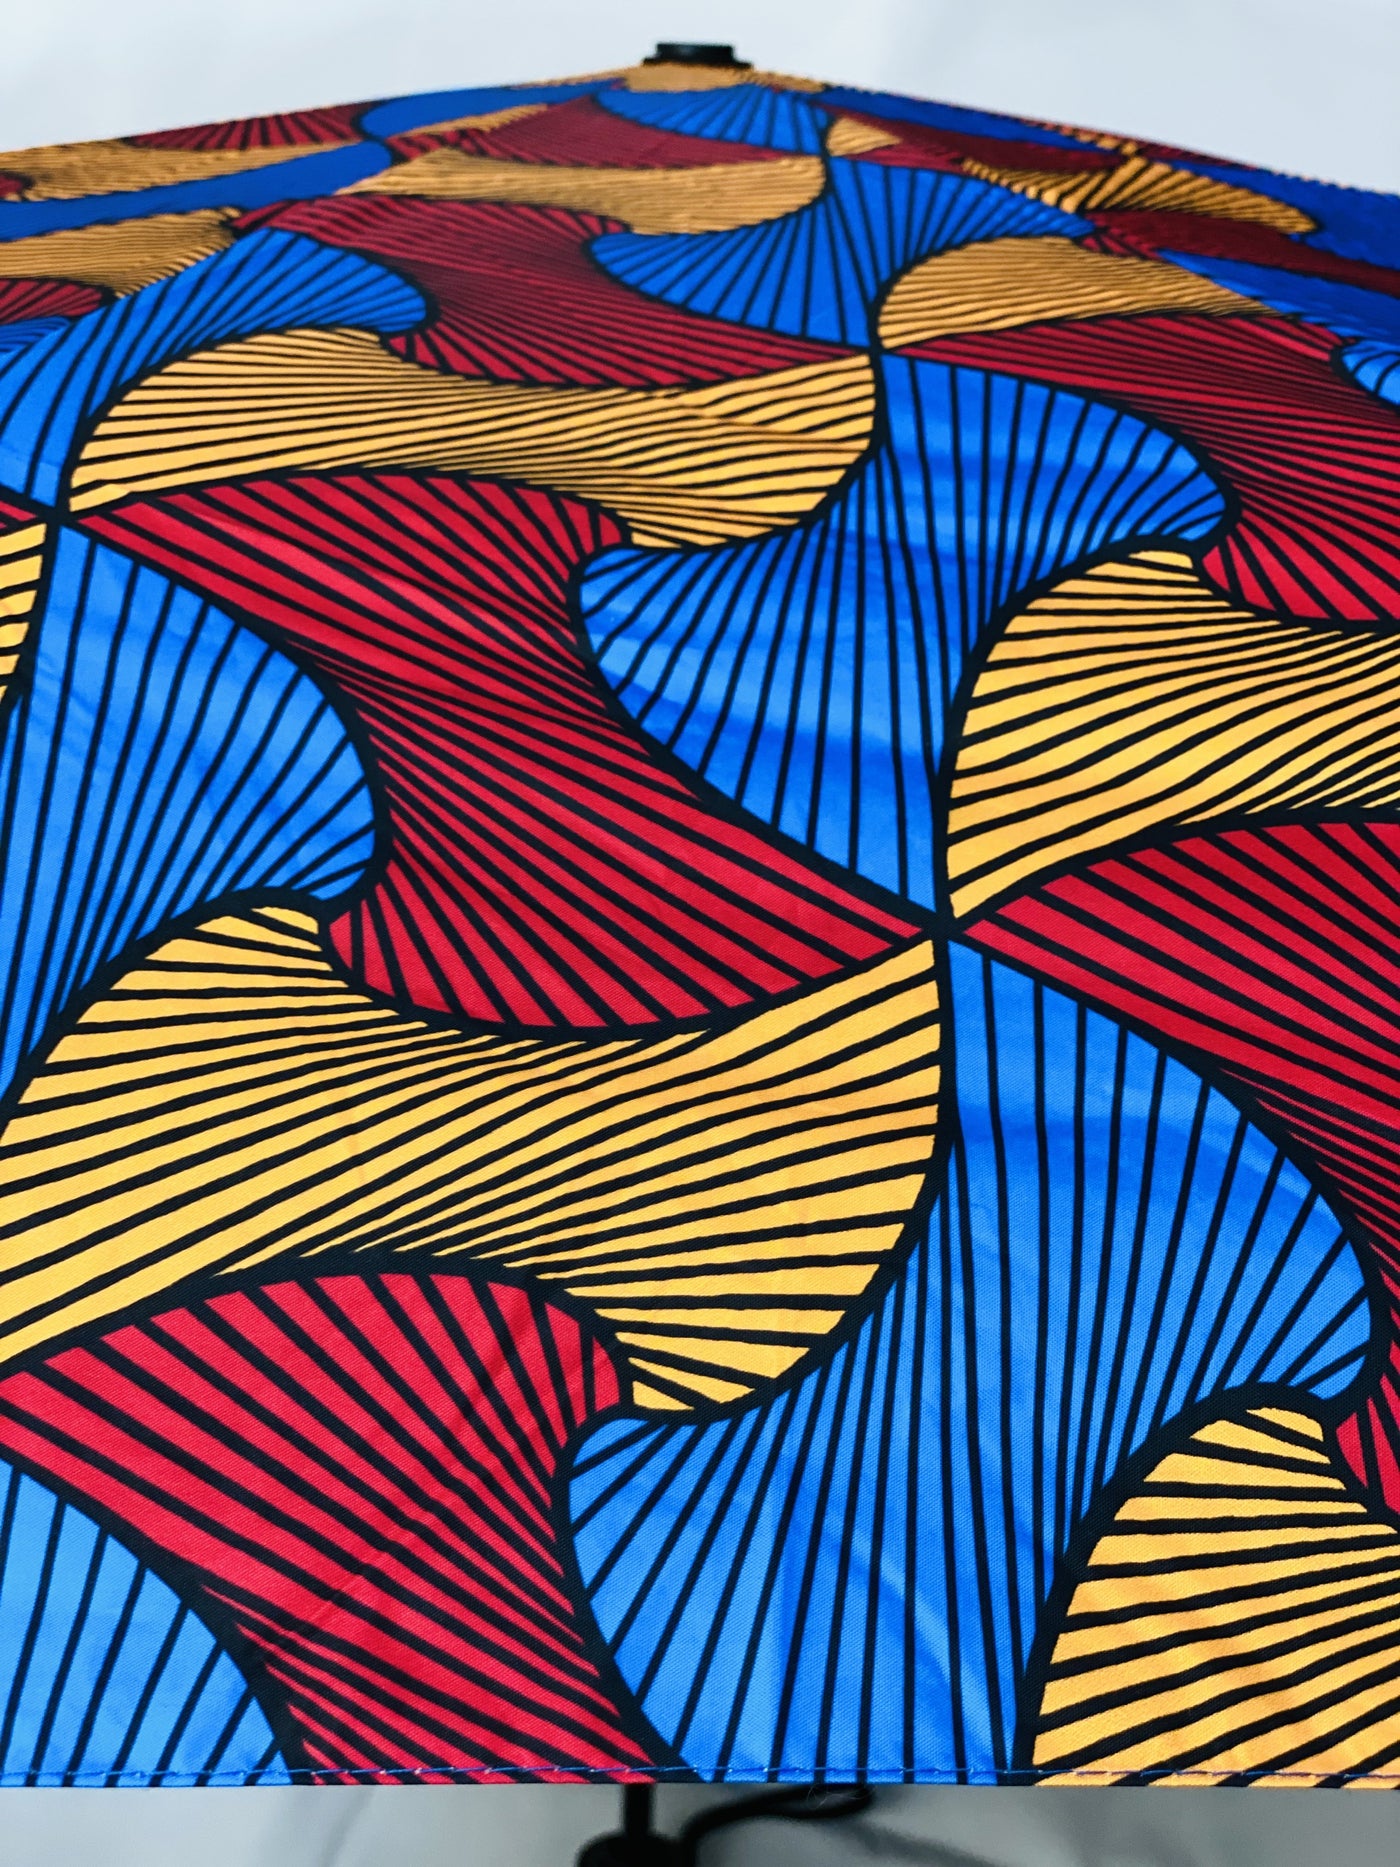 African Print Umbrella - Santana